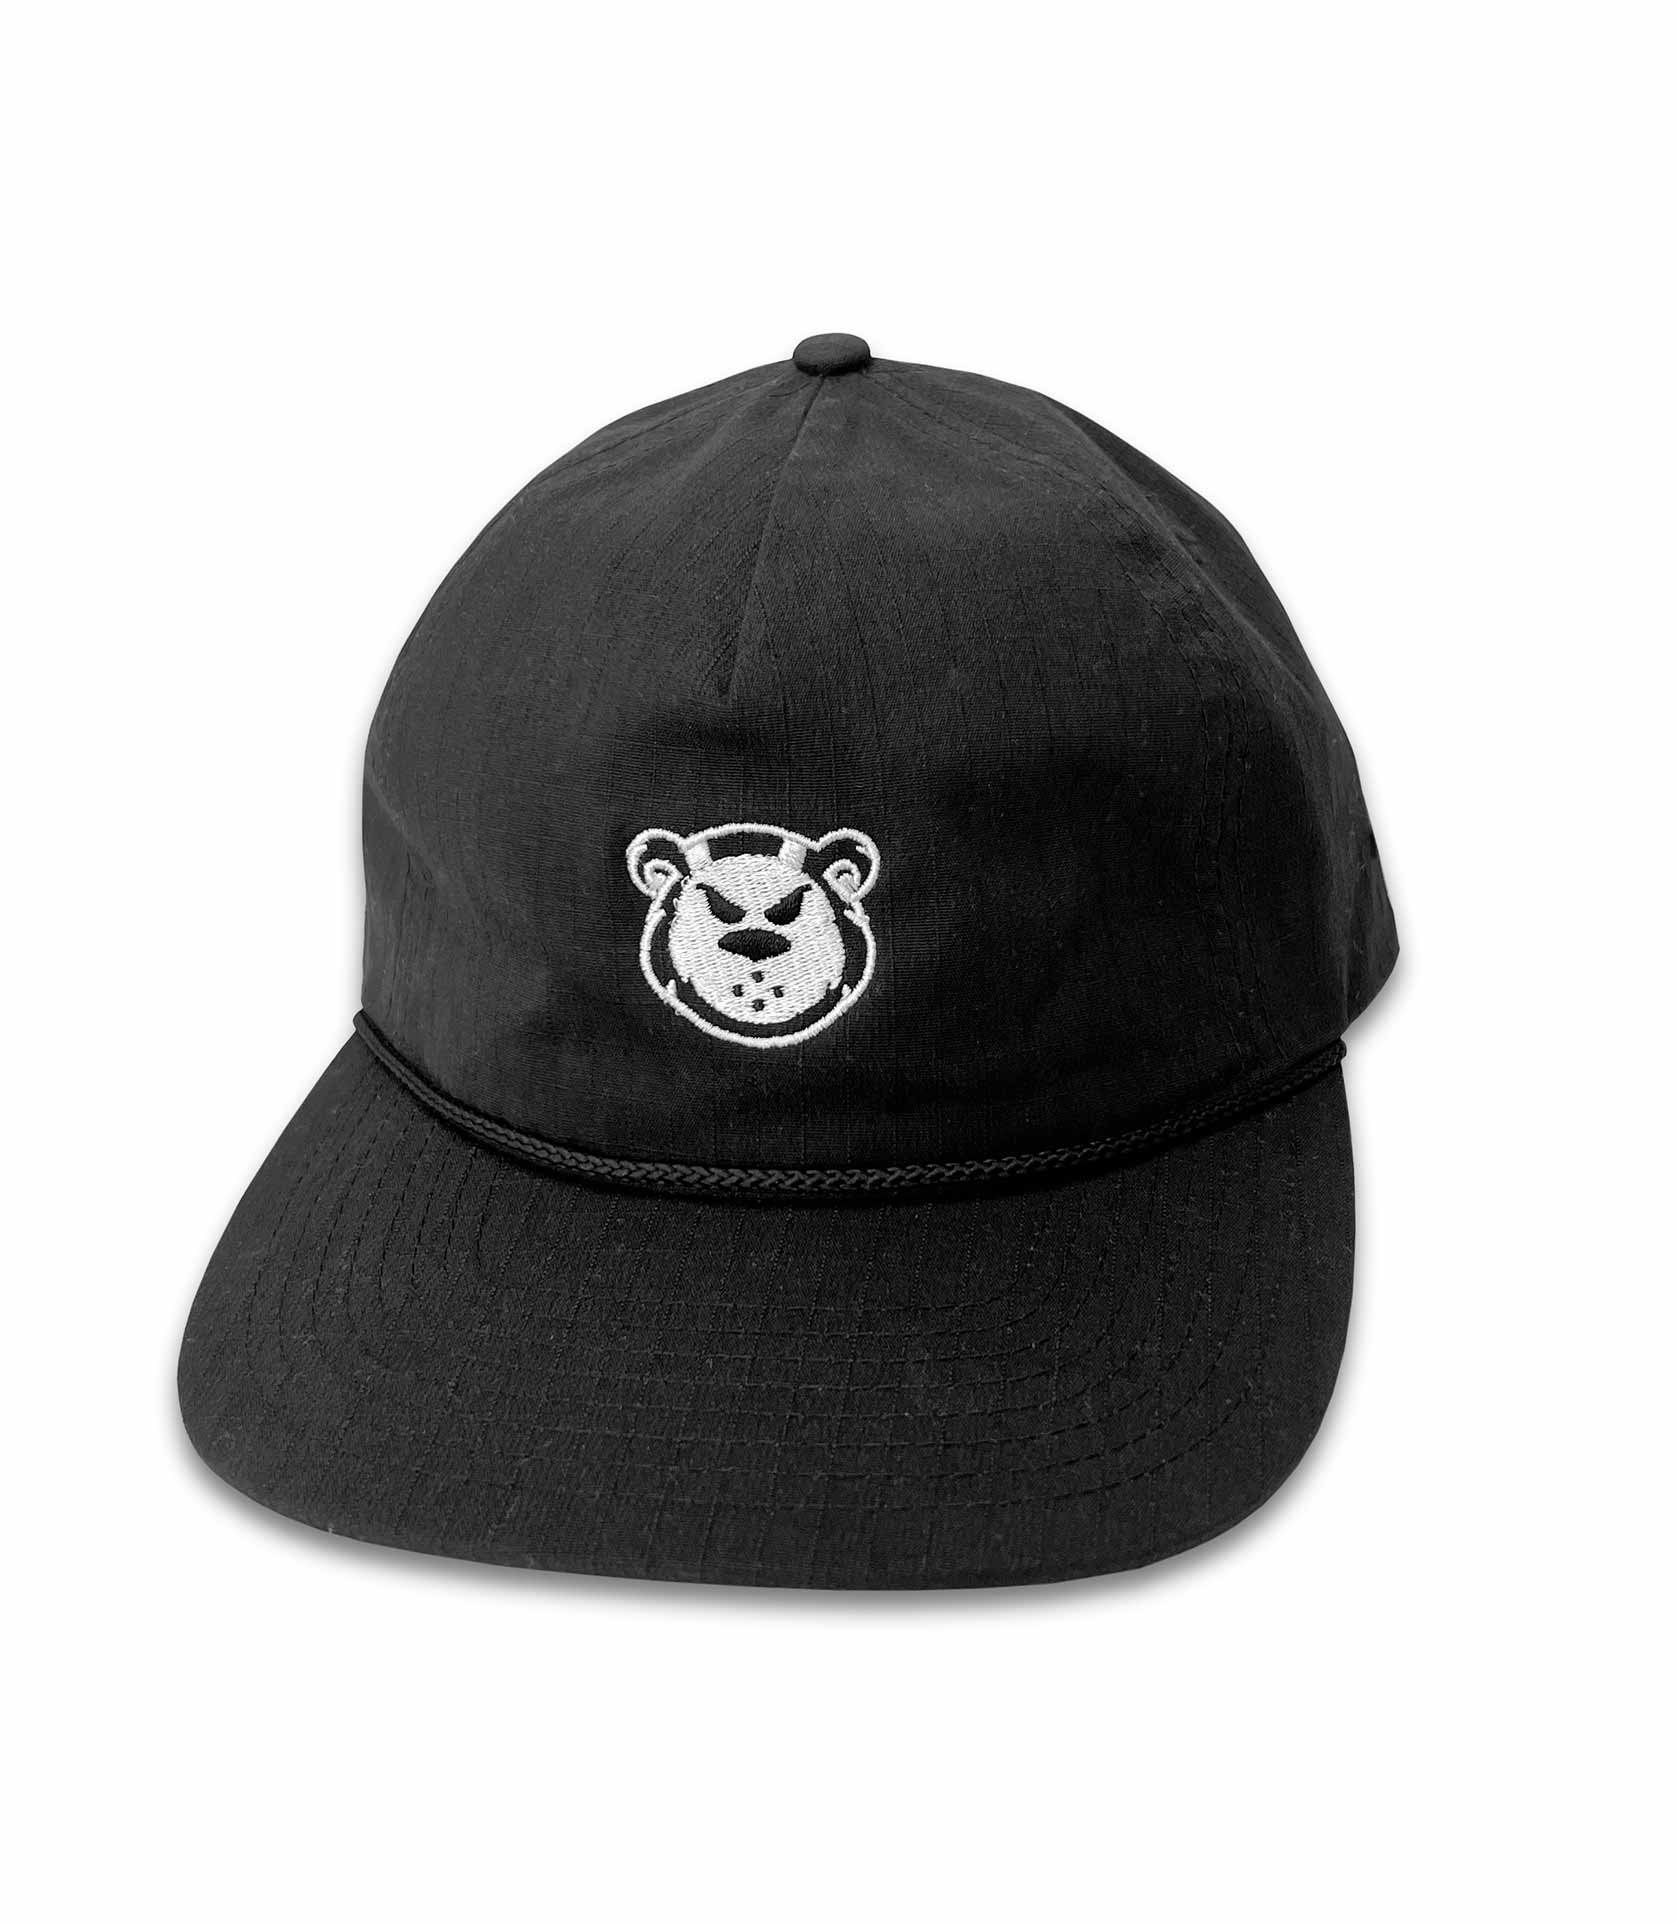 Cub Hat